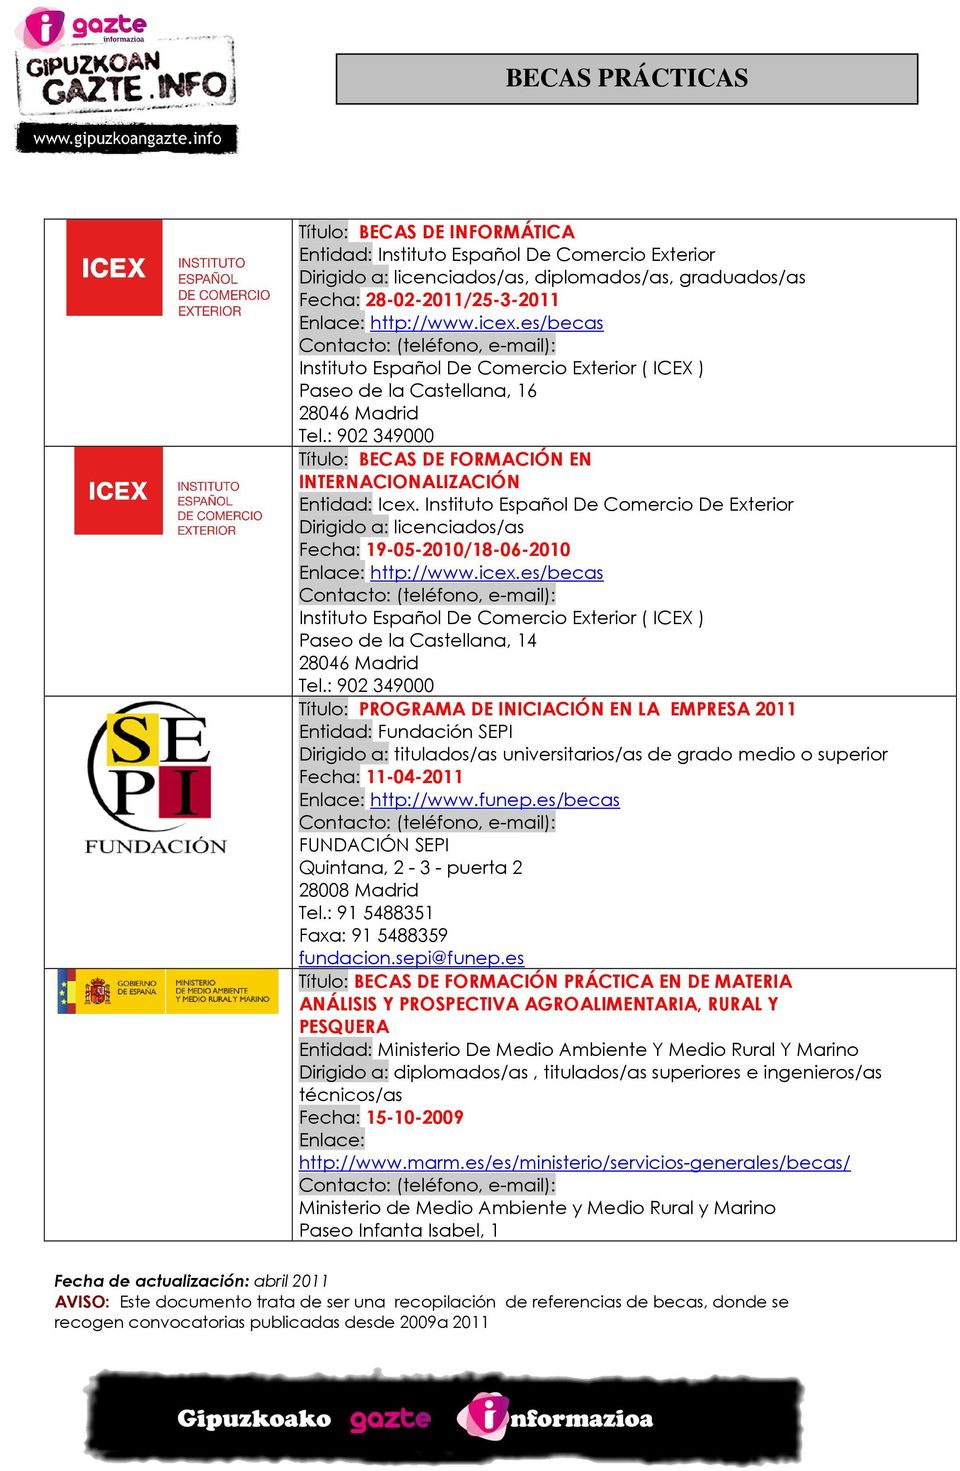 Instituto Español De Comercio De Exterior Dirigido a: licenciados/as Fecha: 19-05-2010/18-06-2010 http://www.icex.